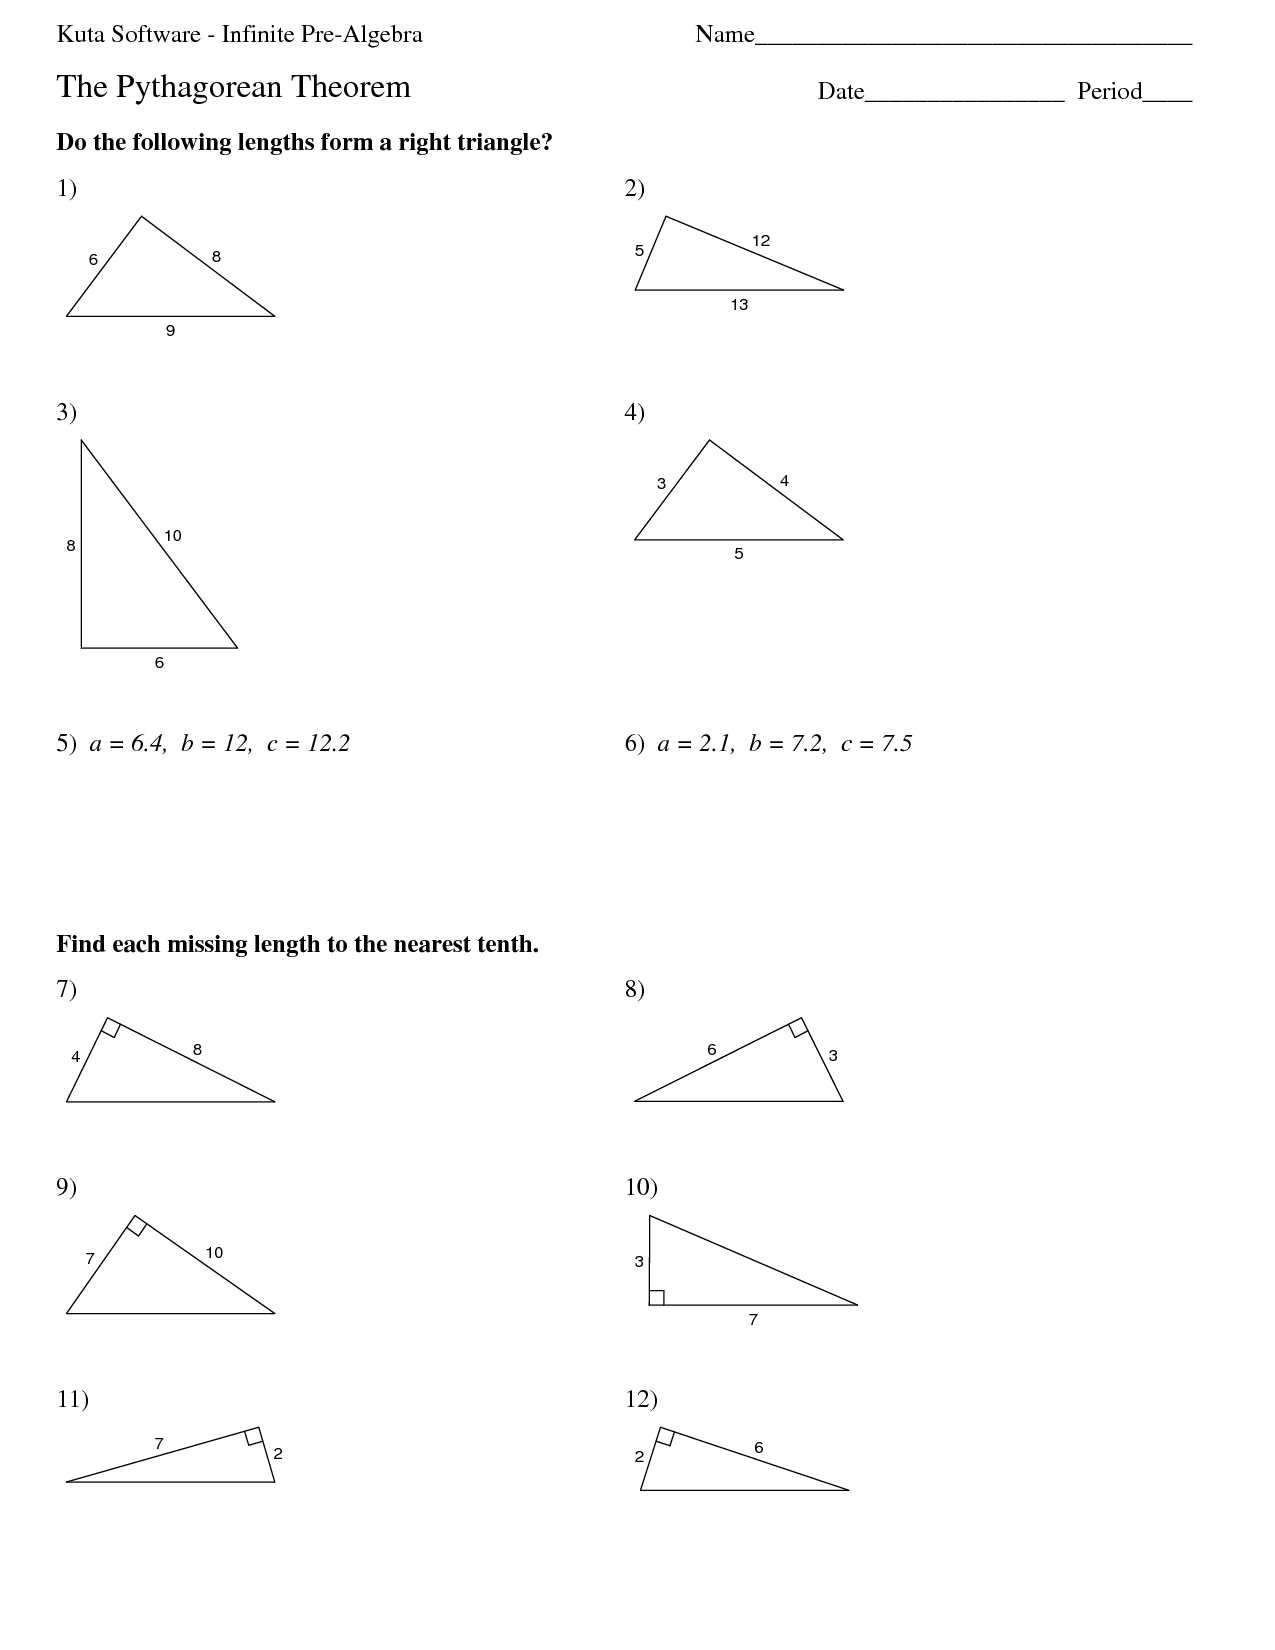 16 Best Images of Infinite Algebra 1 Worksheets - Kuta ...